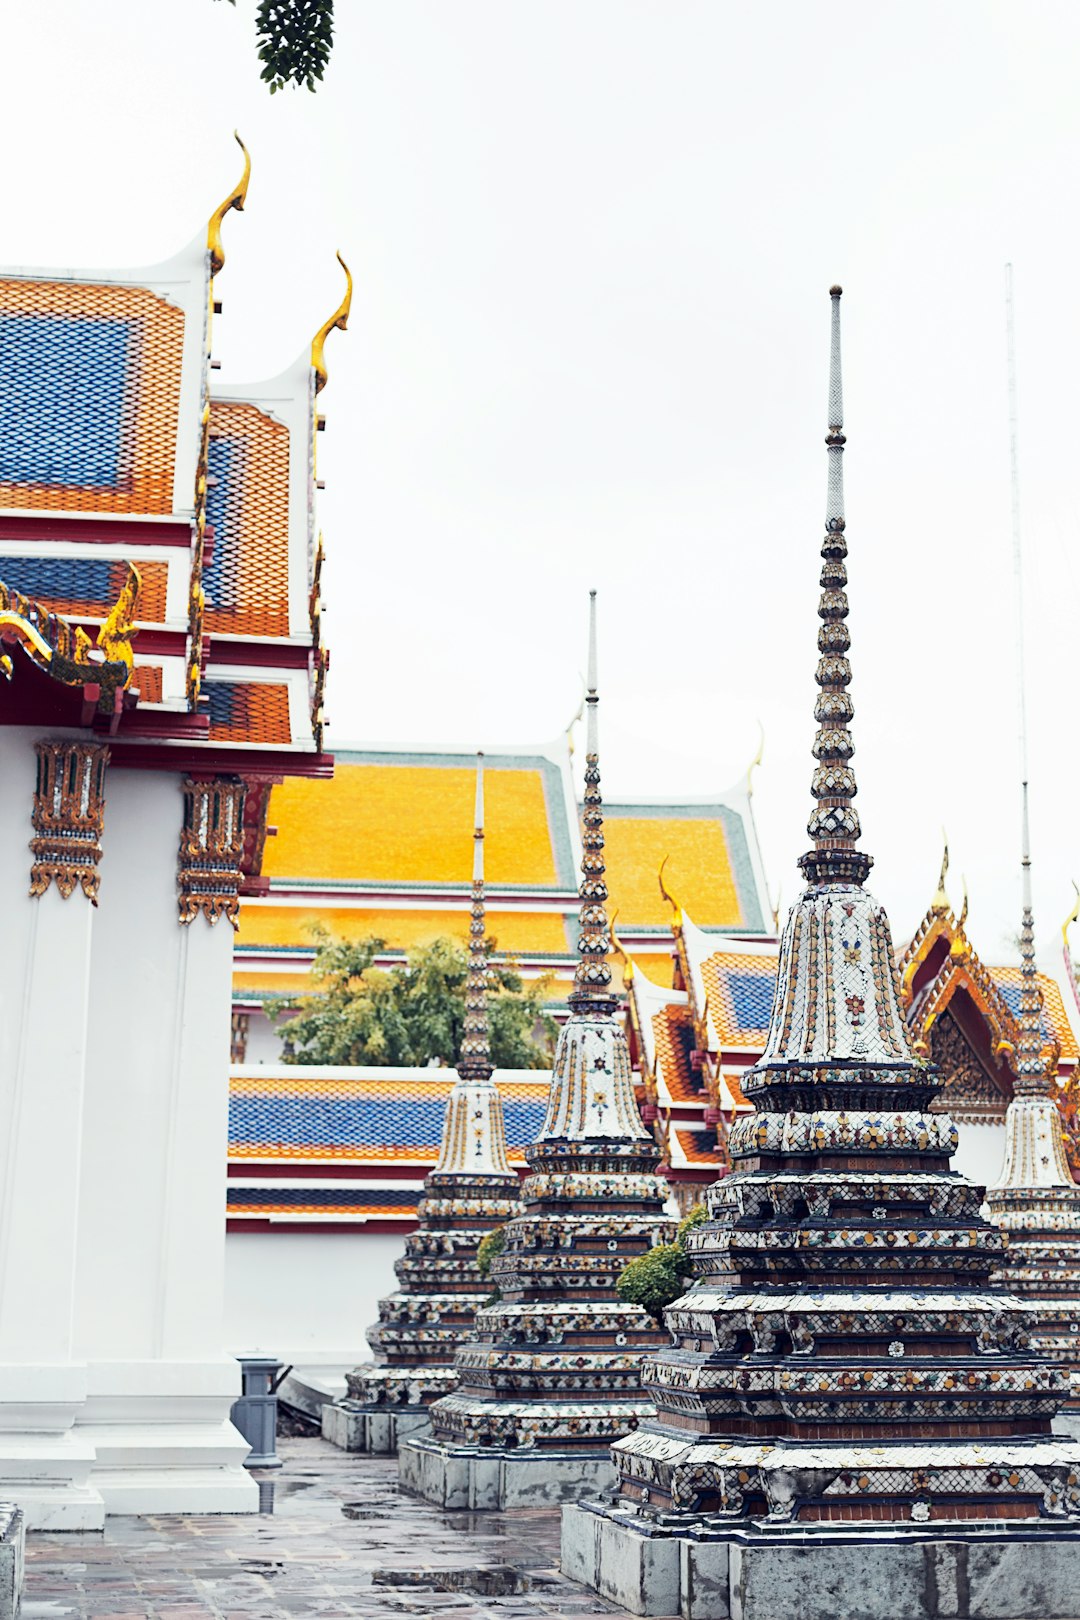 photo of Wat Phra Chetuphon Vimolmangklararm Rajwaramahaviharn Temple near Wat Arun